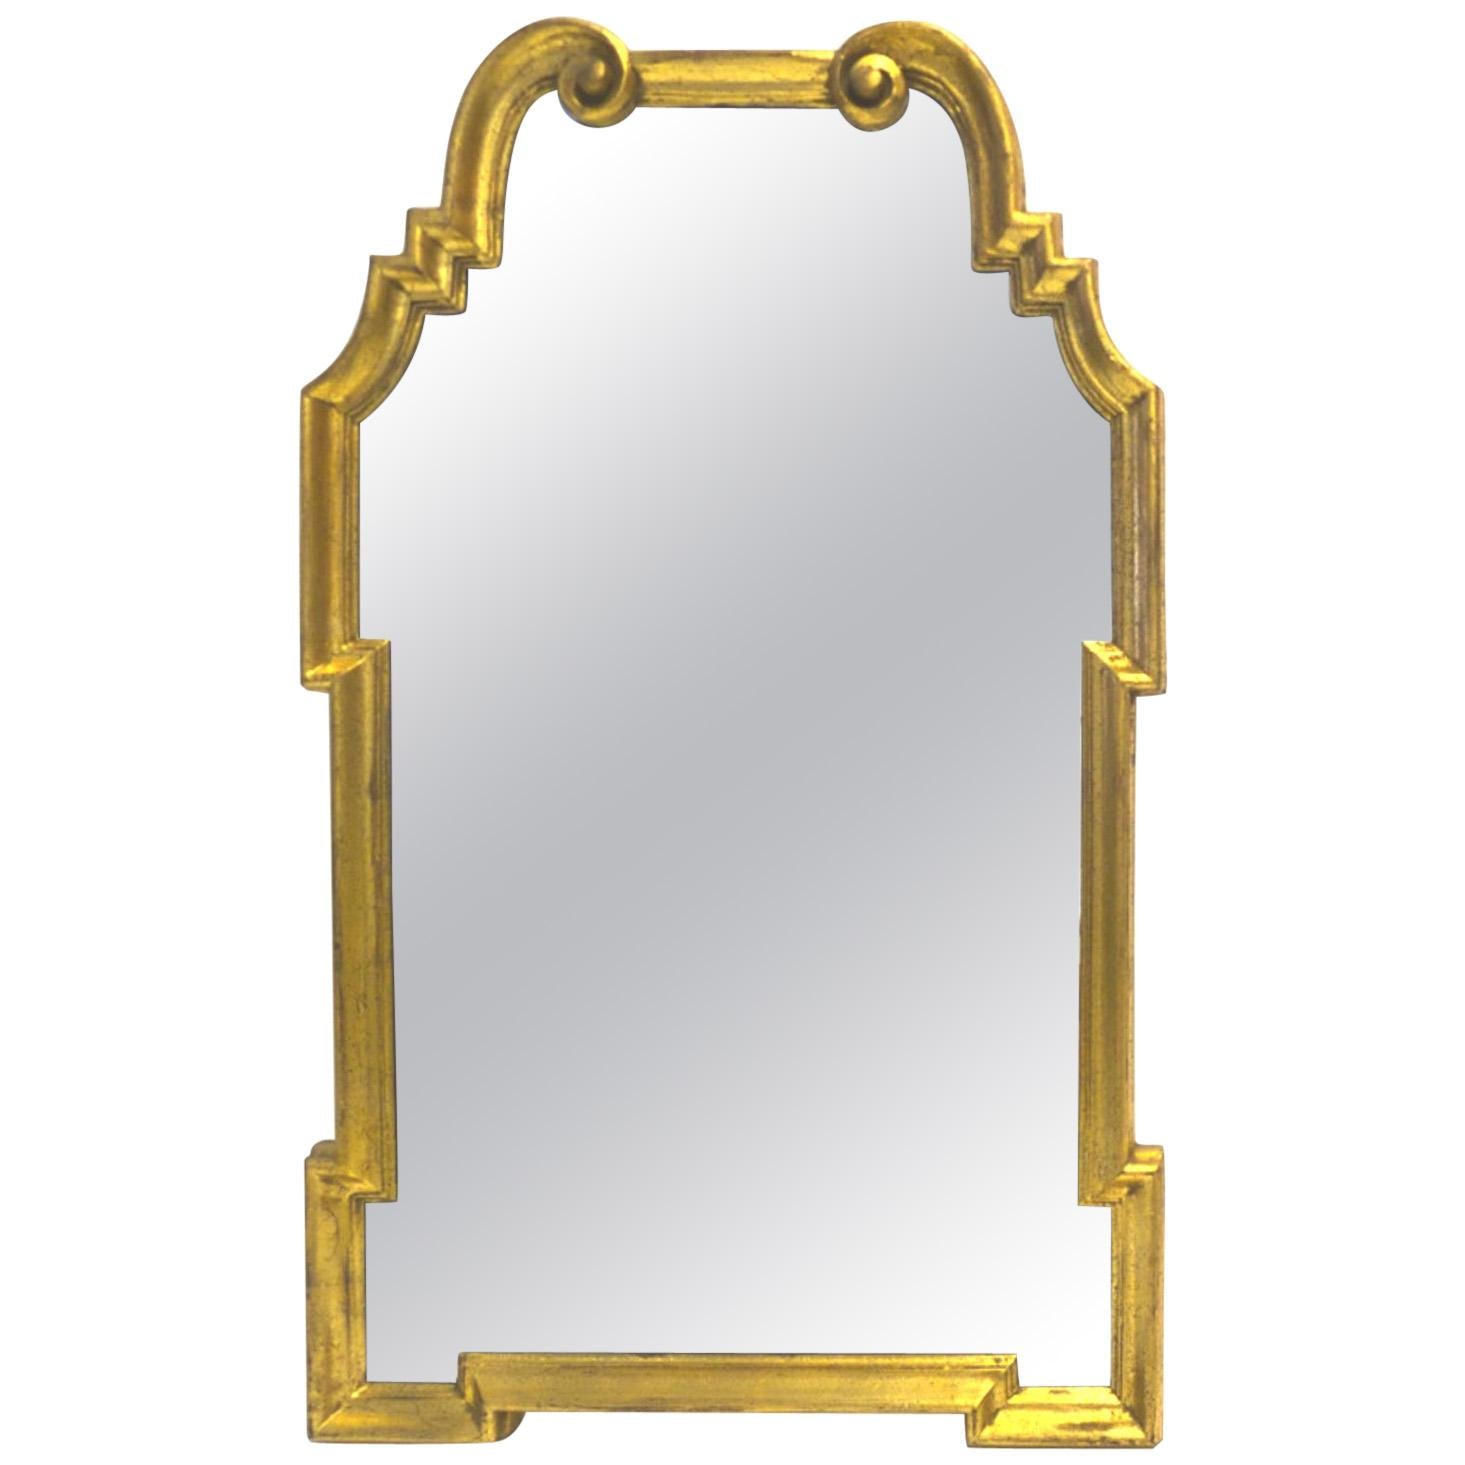 Stunning Italian LaBarge Gold Leaf Wood Frame Mirror in Greek Key Design